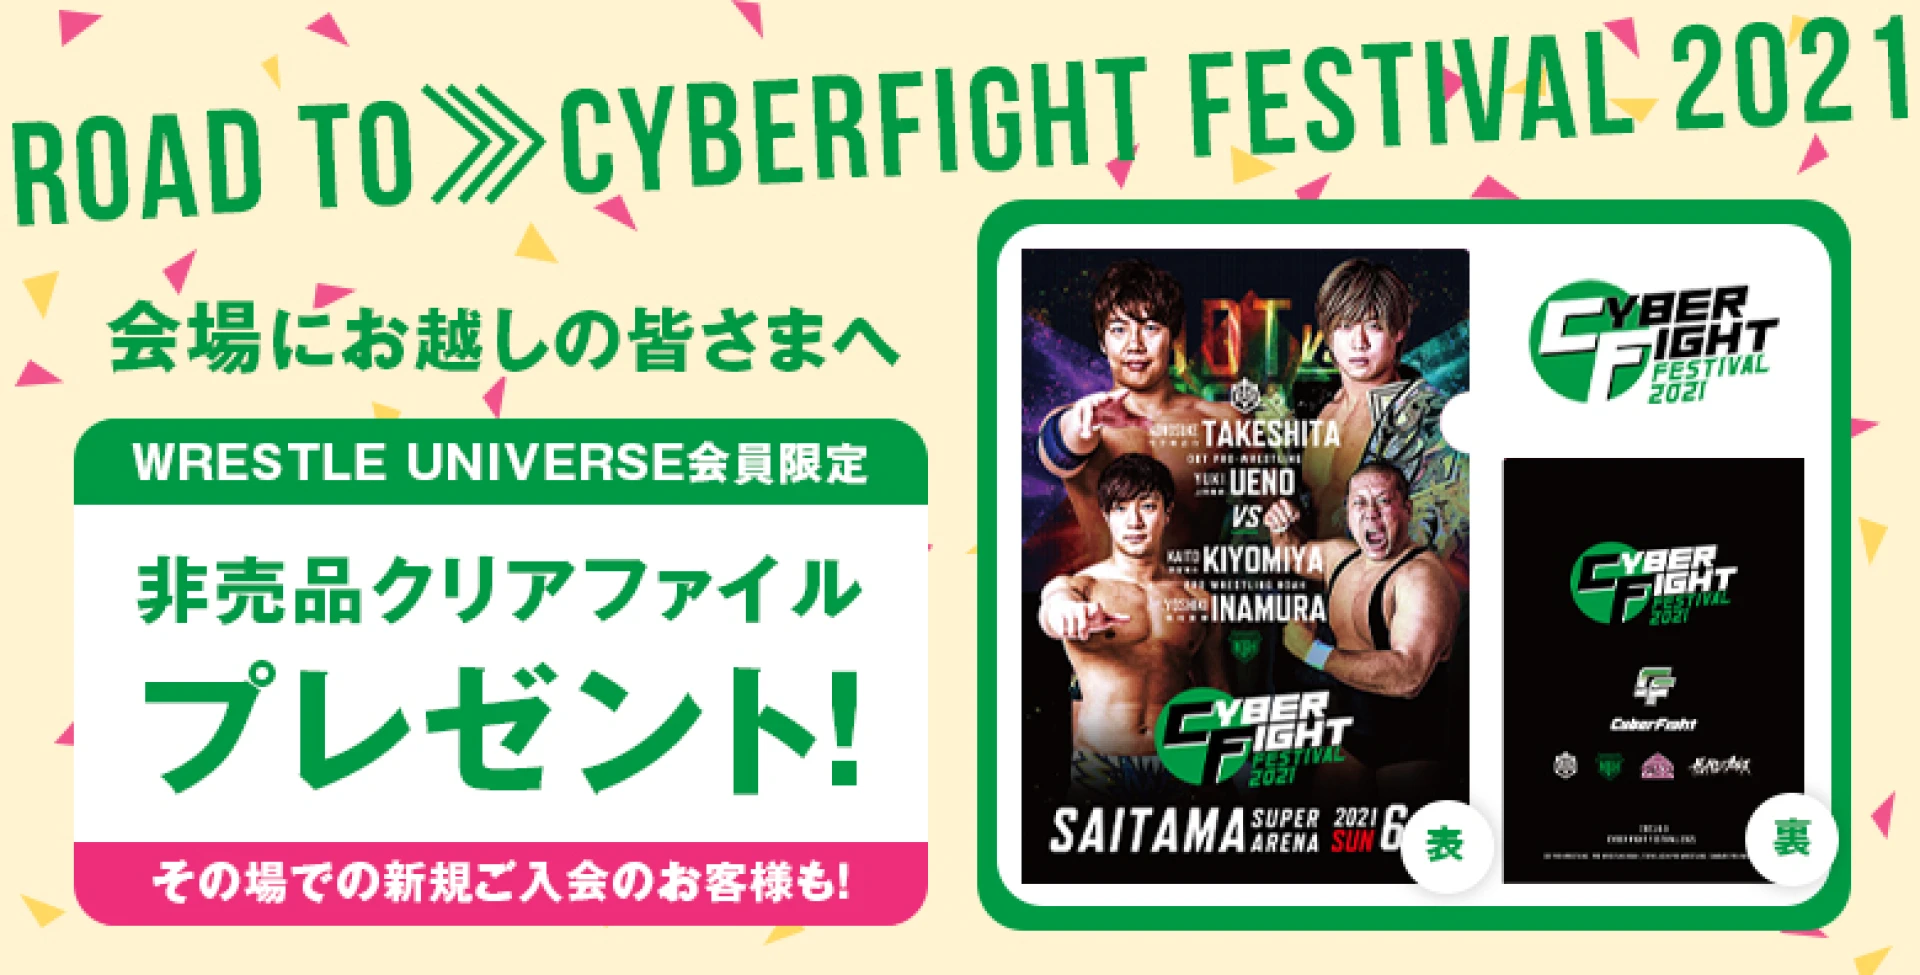 「Road to CyberFight Festival 2021」ノアの会場でクリアファイルプレゼント！